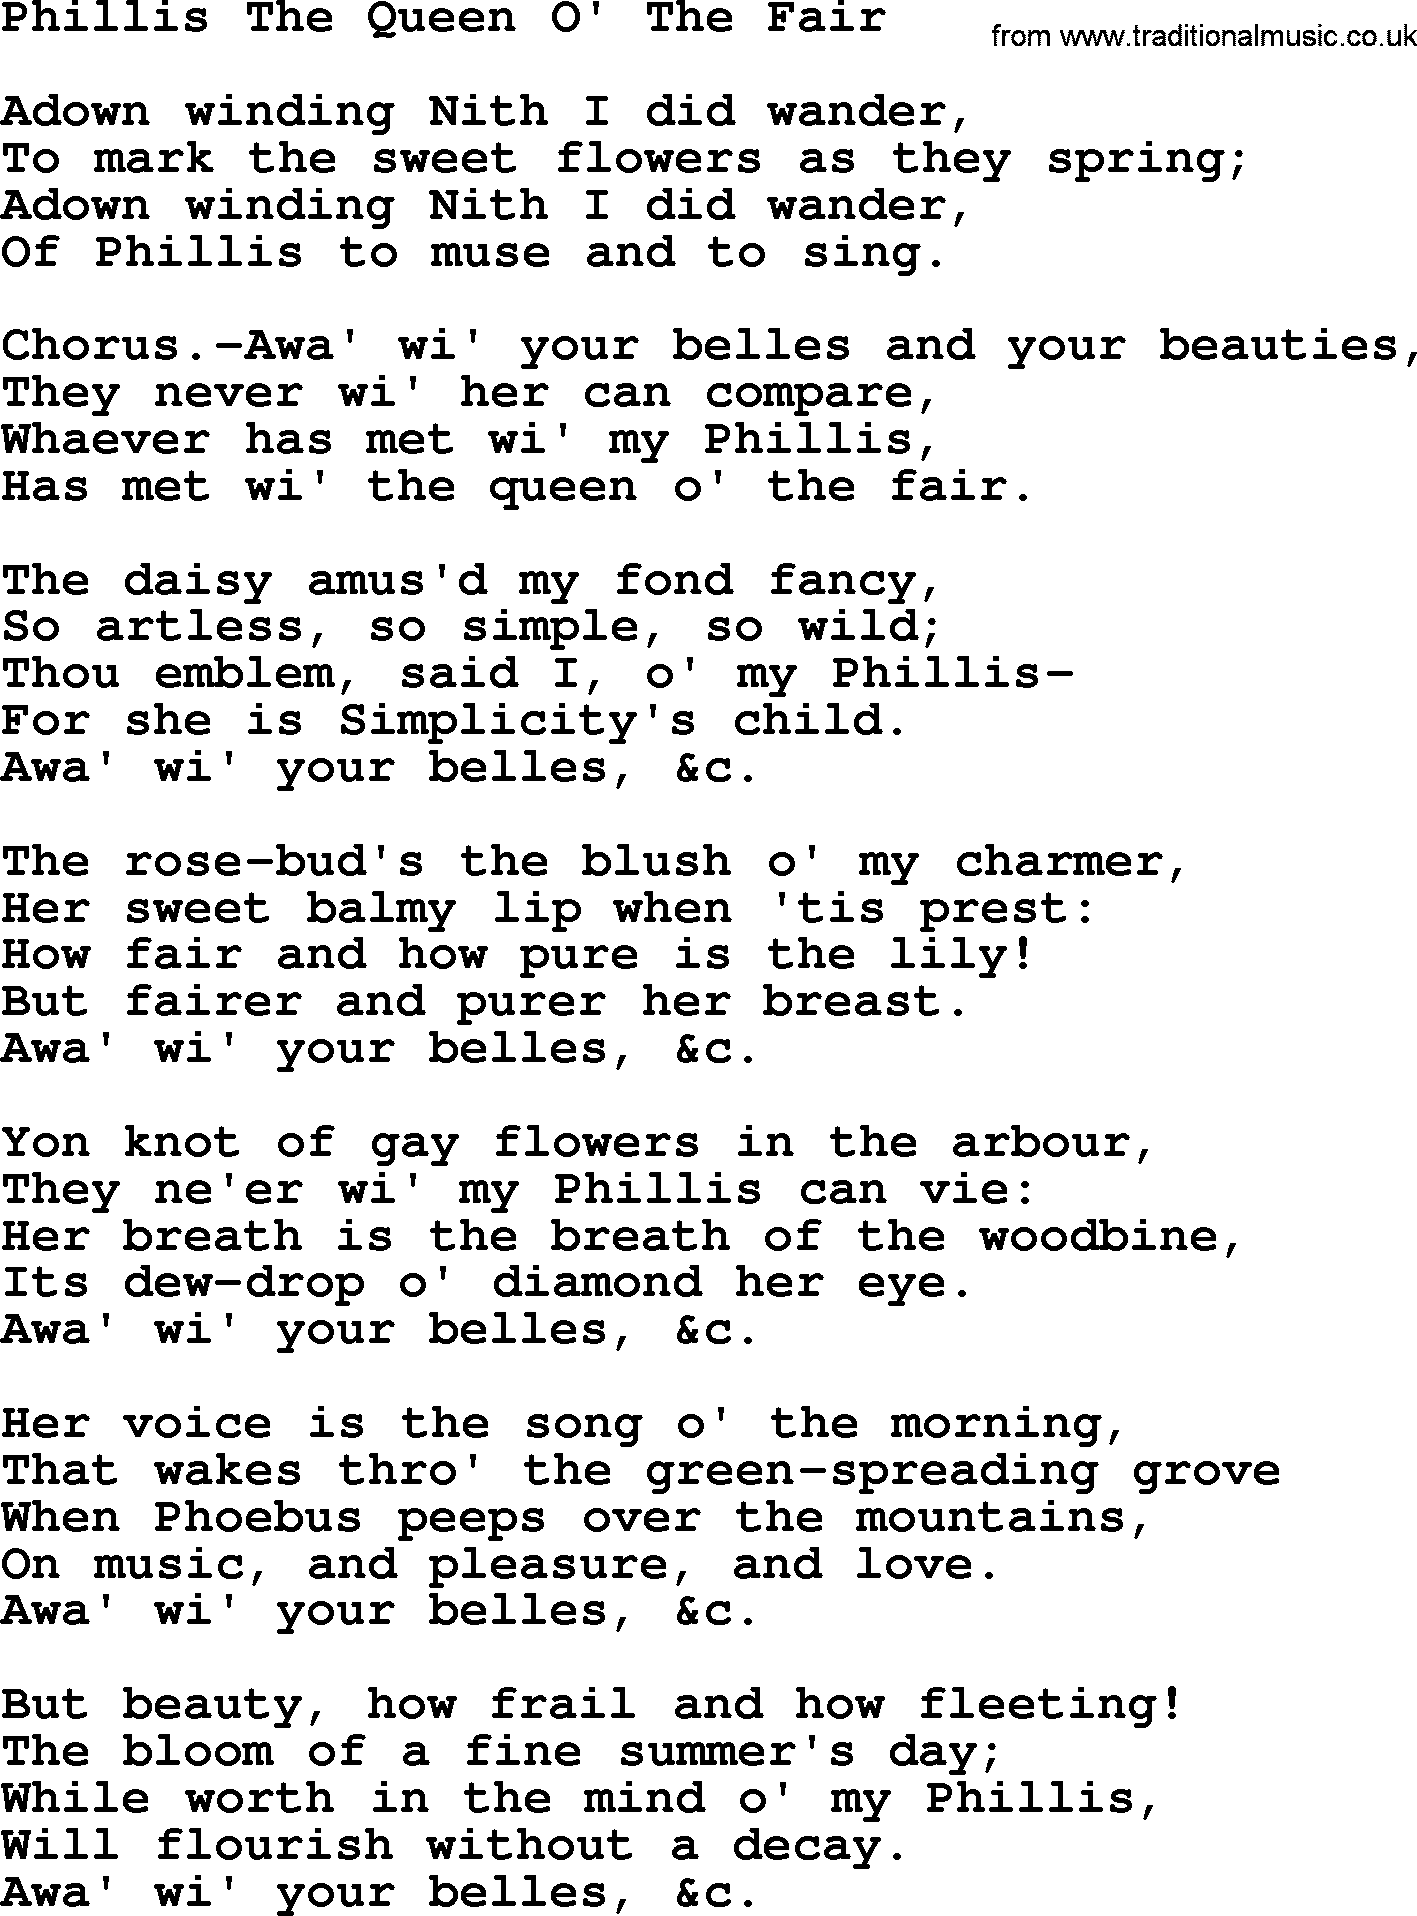 Robert Burns Songs & Lyrics: Phillis The Queen O' The Fair